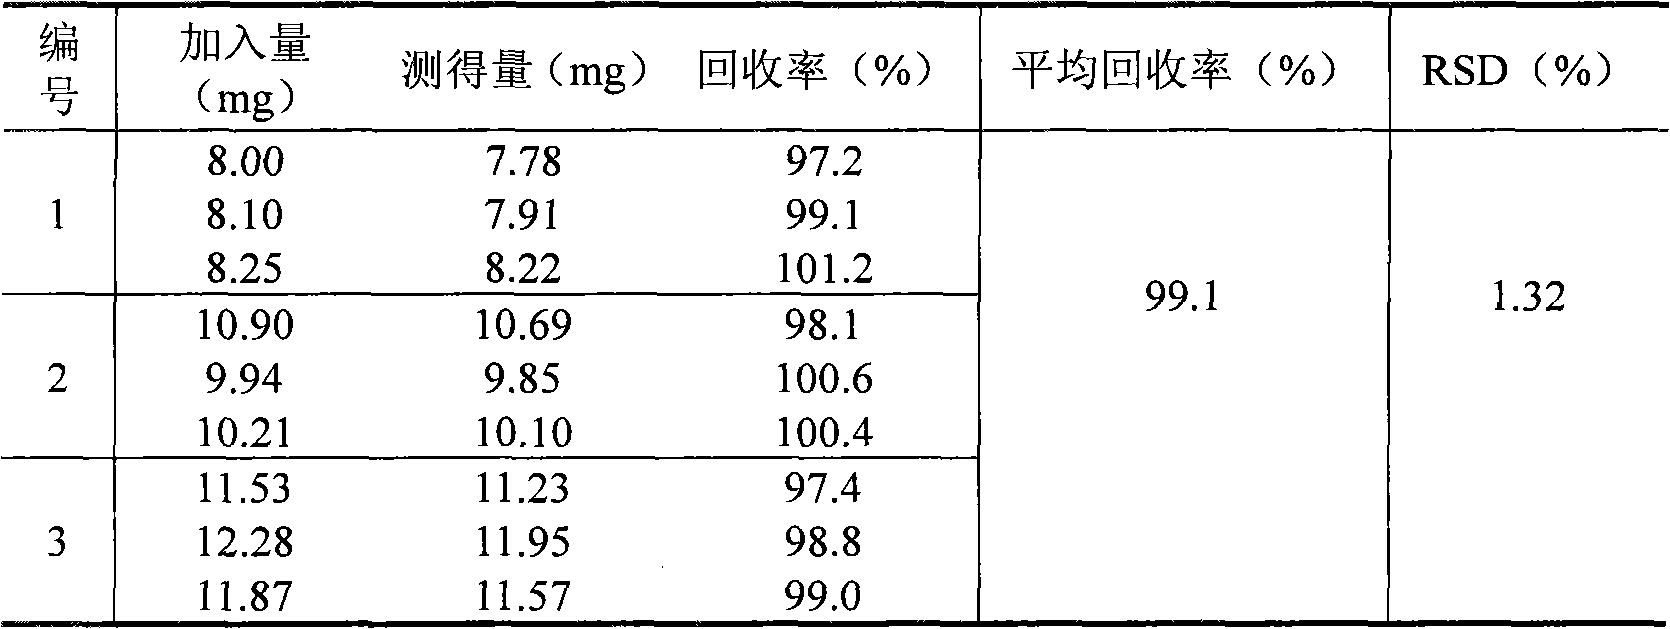 Content measuring method of metformin hydrochloride enteric coated tablet